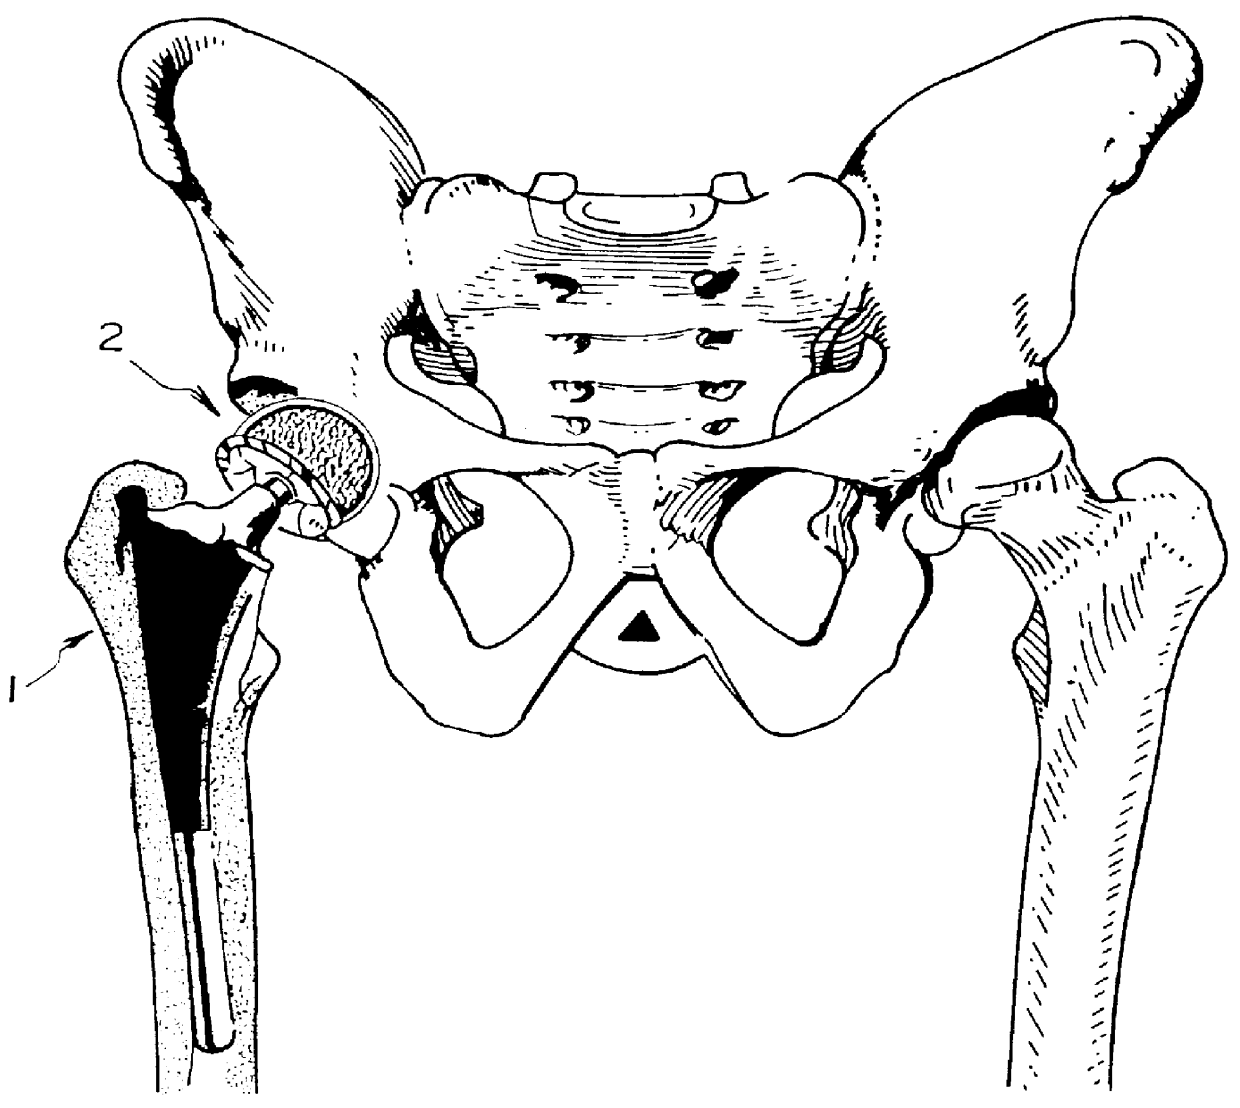 Orthopedic implant system